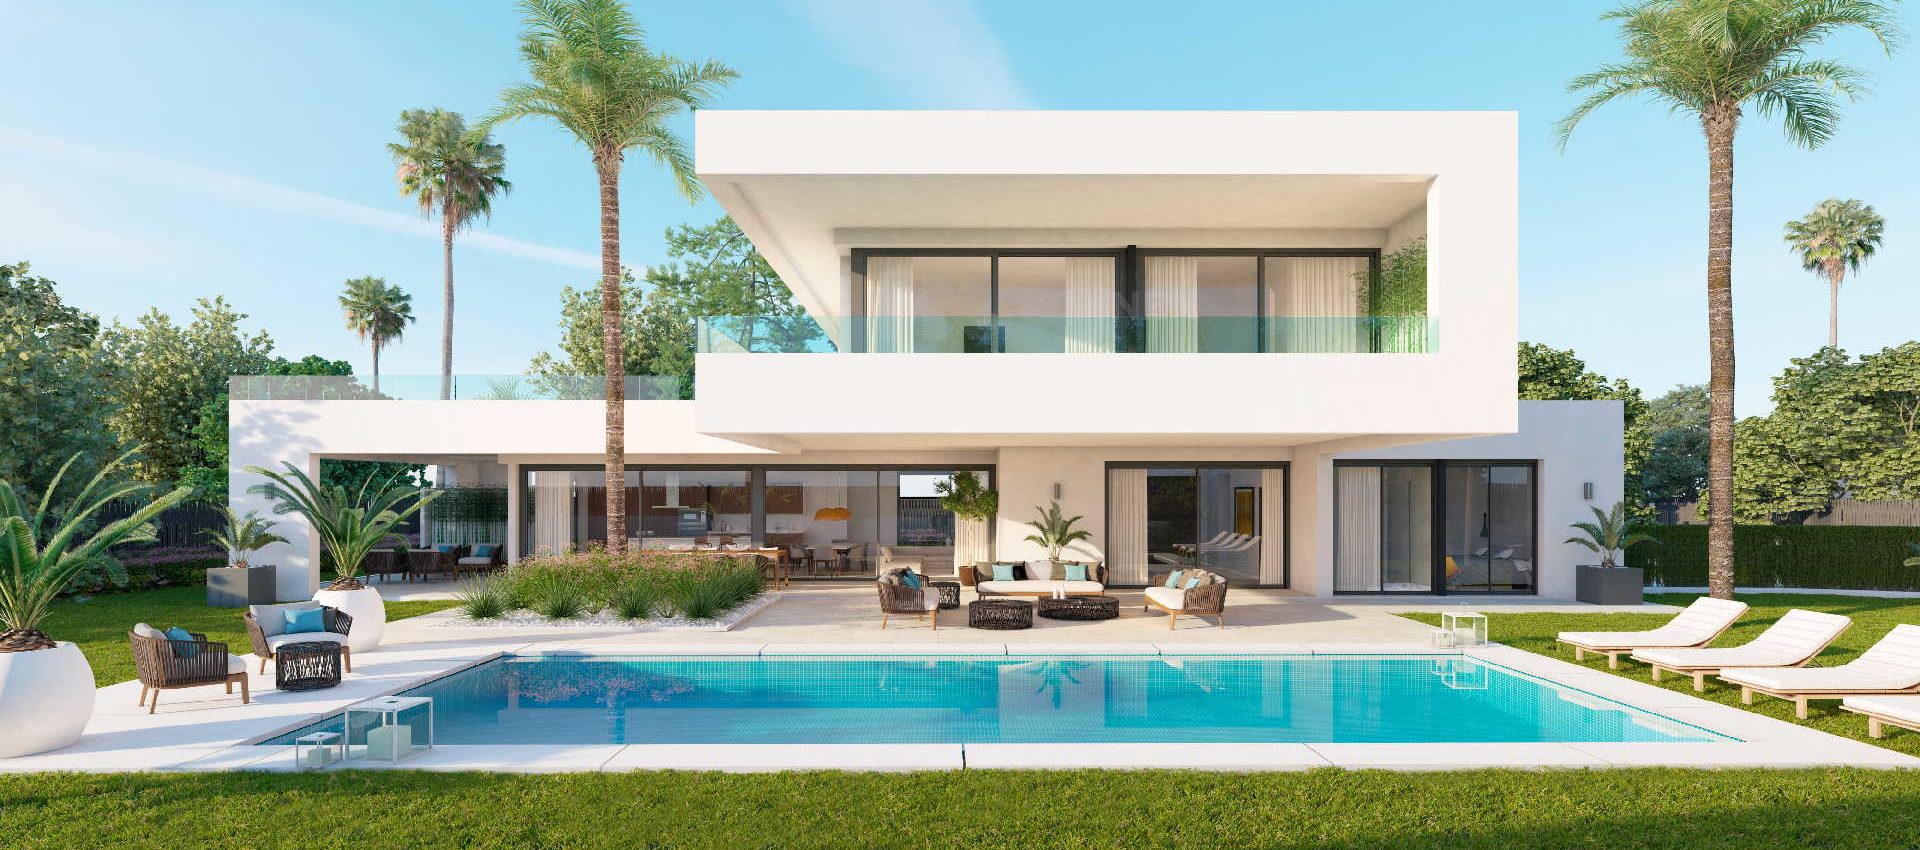 New contemporary modern villas